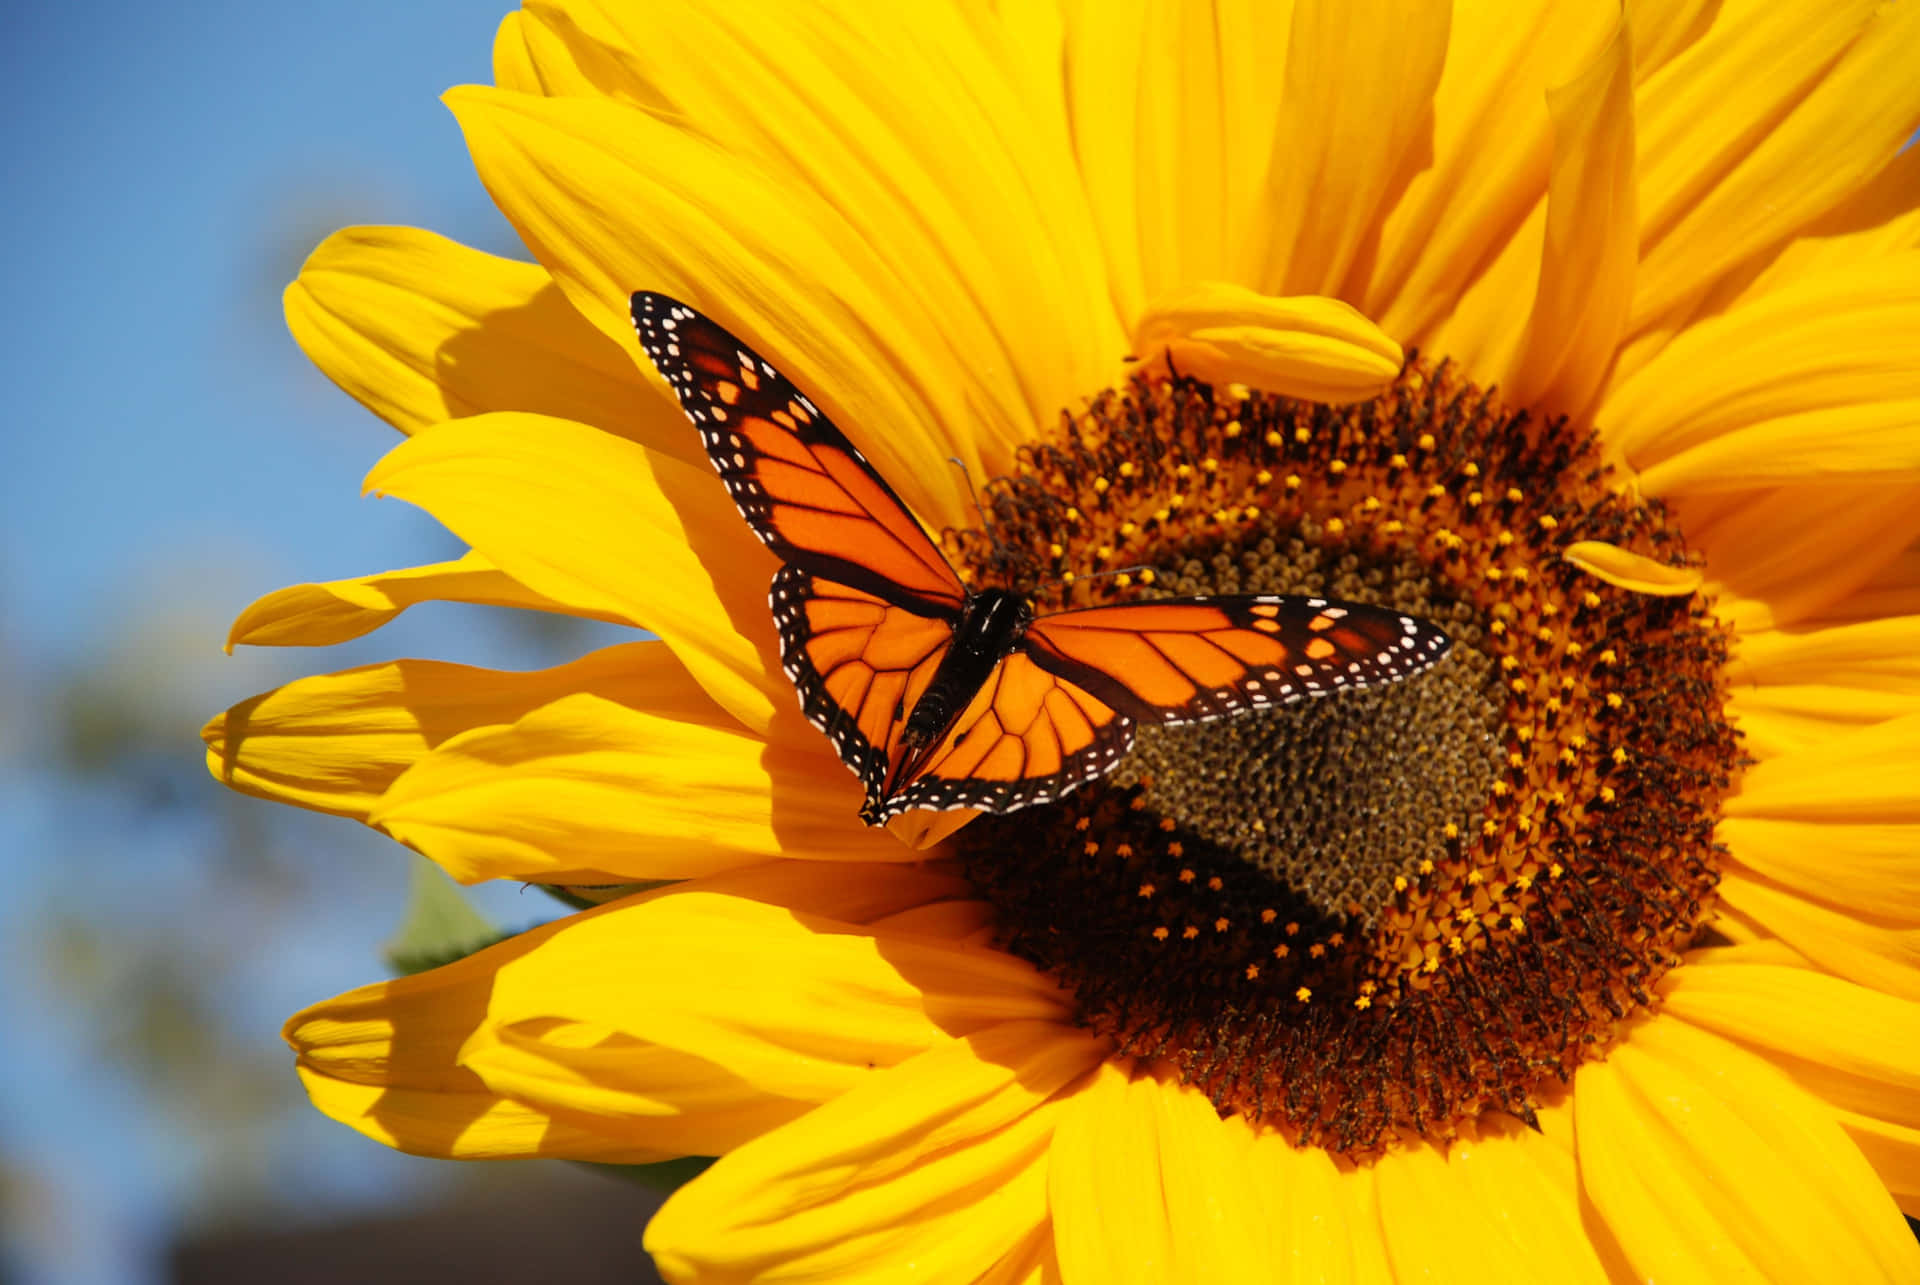 The breathtaking beauty of a Monarch Butterfly